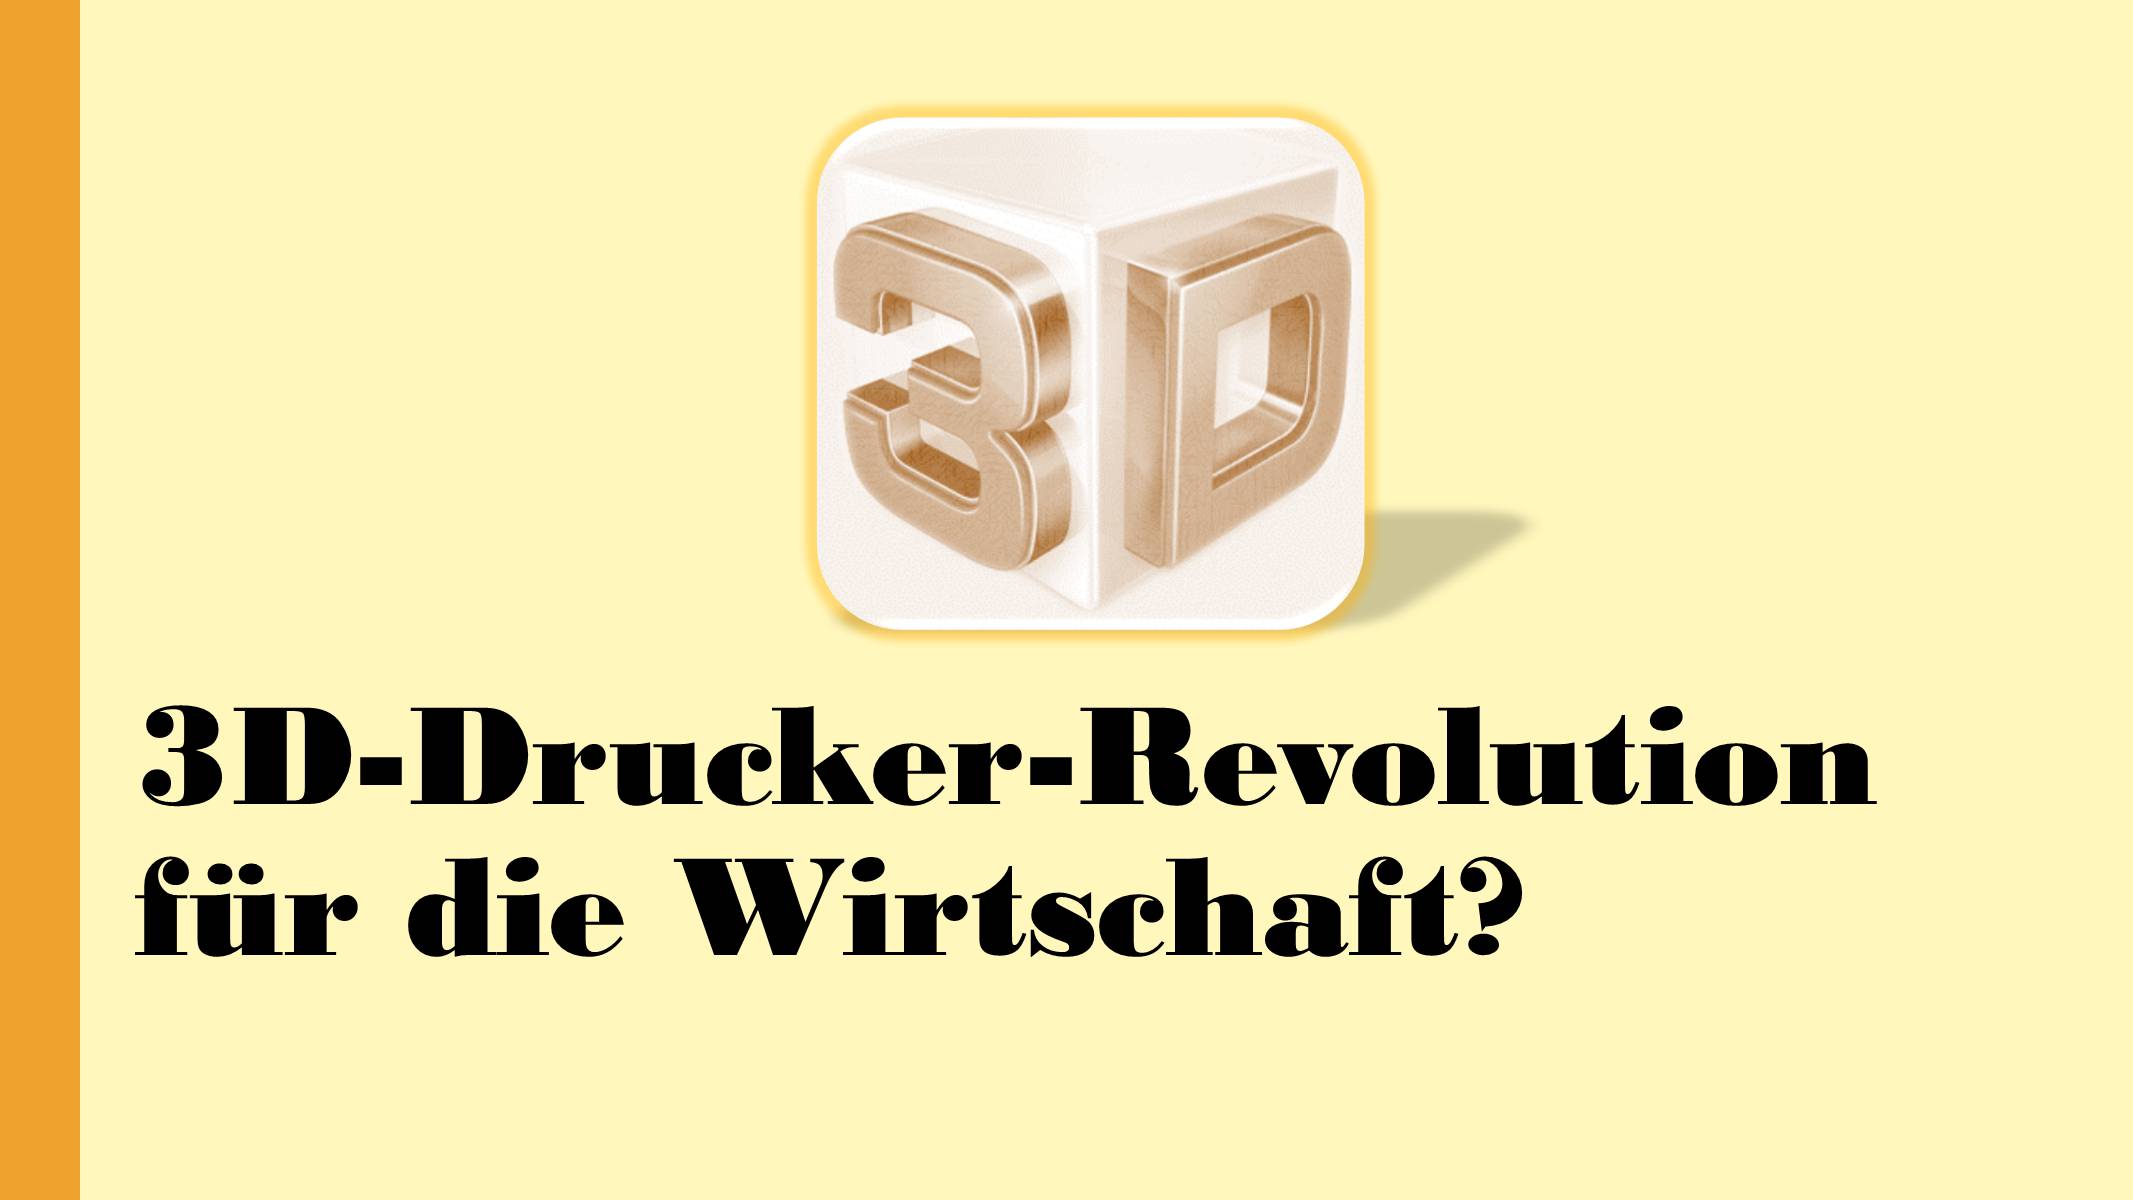 Презентація на тему «3D-Drucker-Revolution fur die Wirtschaft?» - Слайд #1